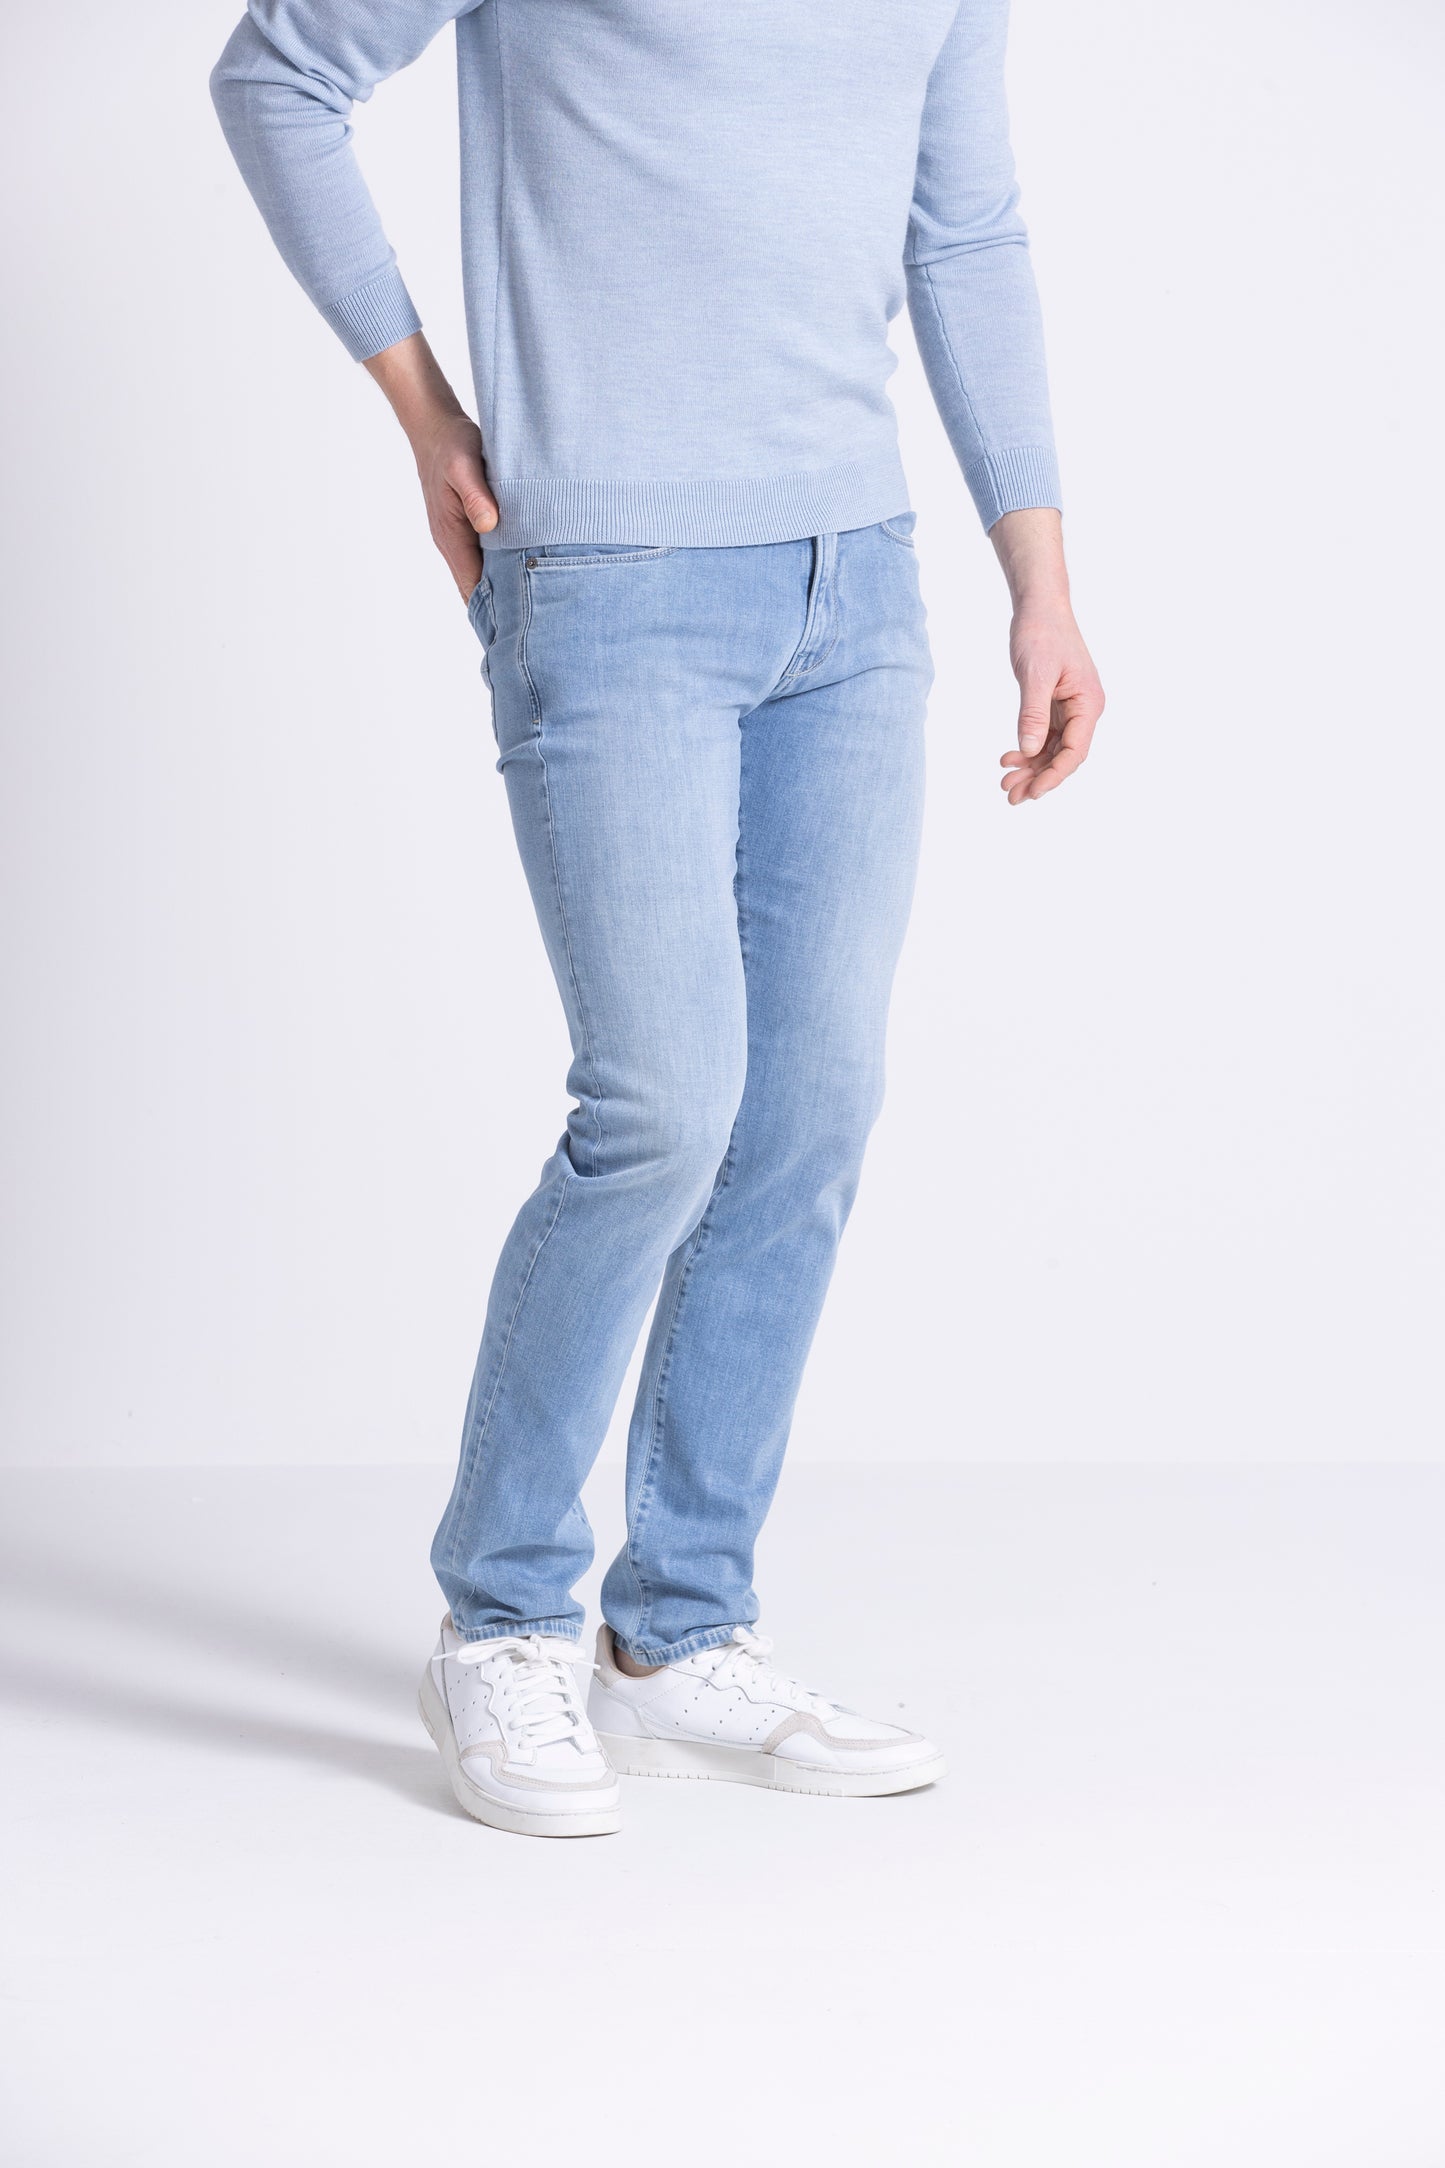 Light blue regular fit jeans Zilton - Rodger 08/910